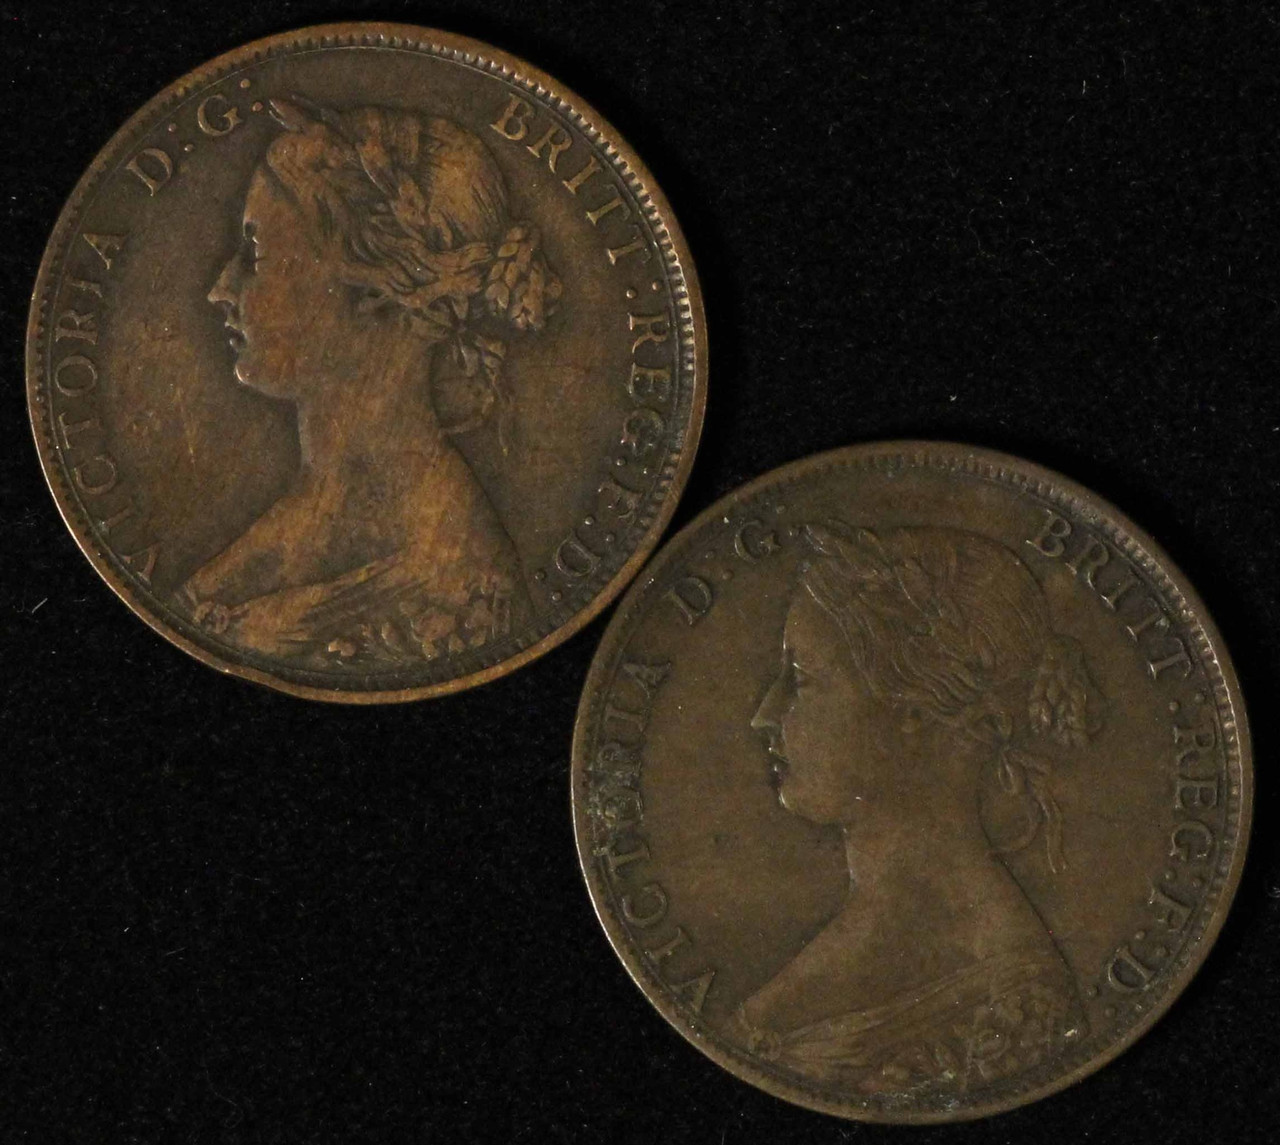 1861 Nova Scotia Cent Pair - Free Shipping USA - The Happy Coin